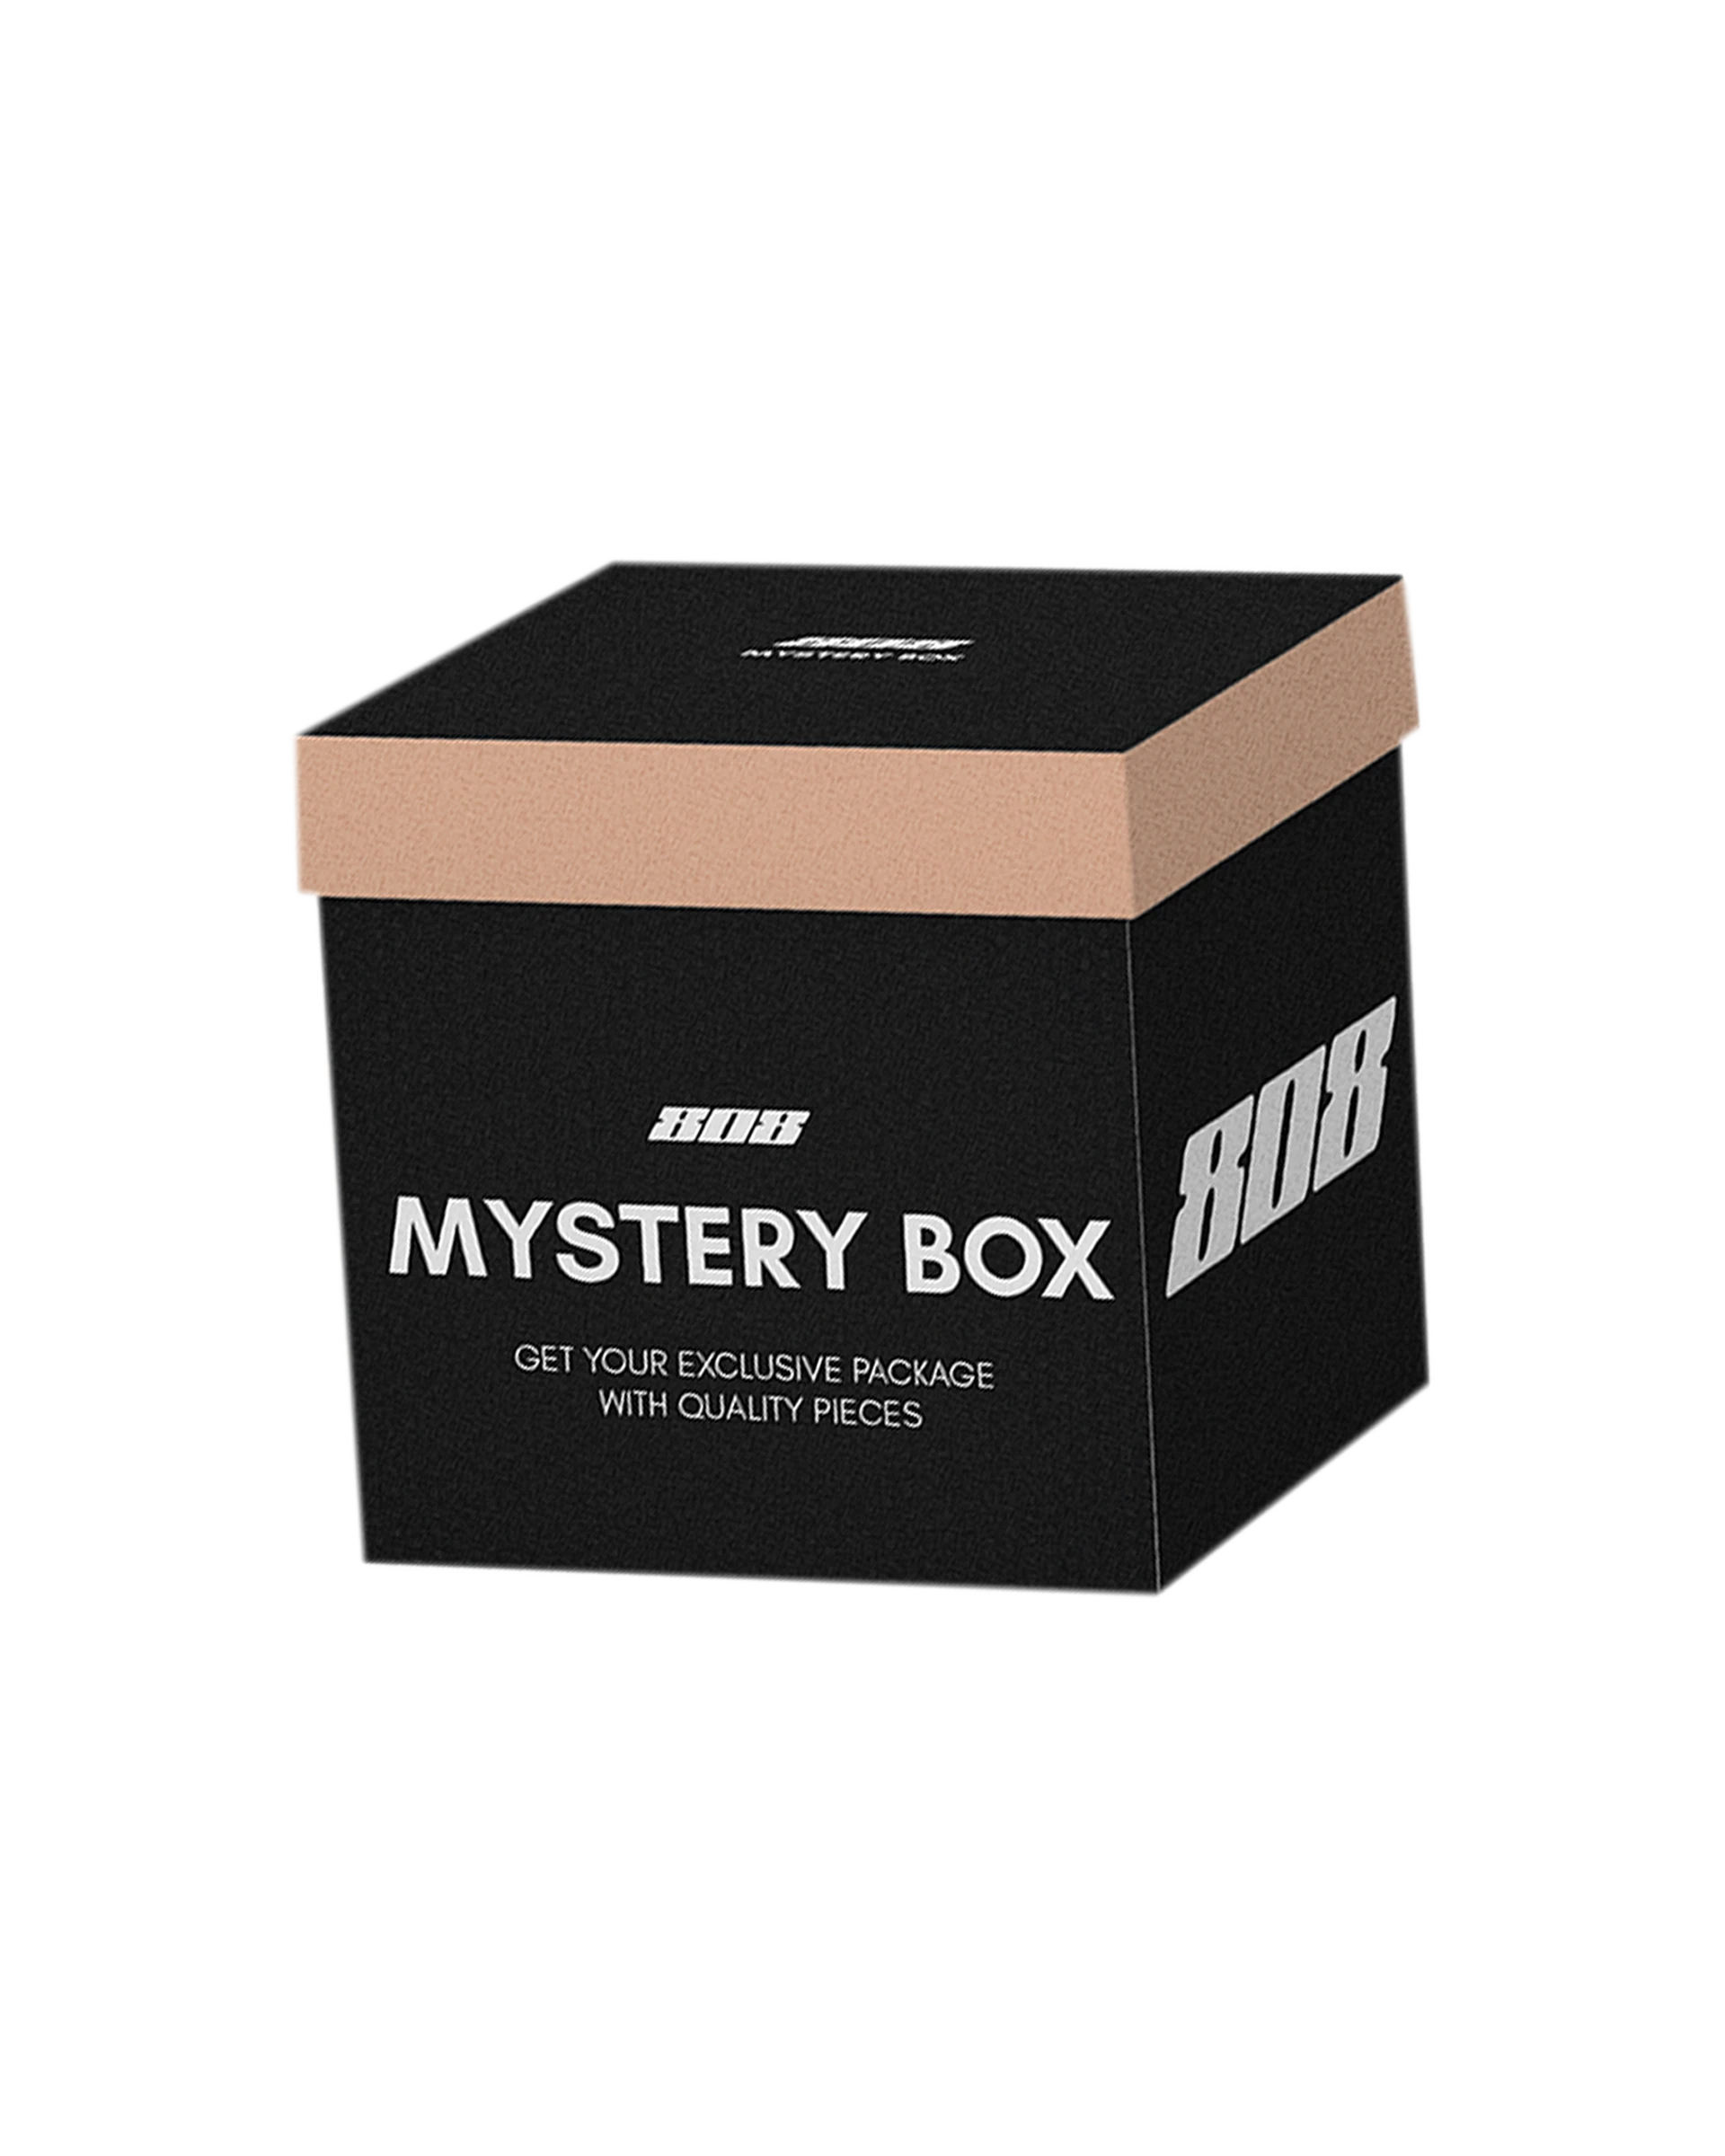 MYSTERY BOX LARGE